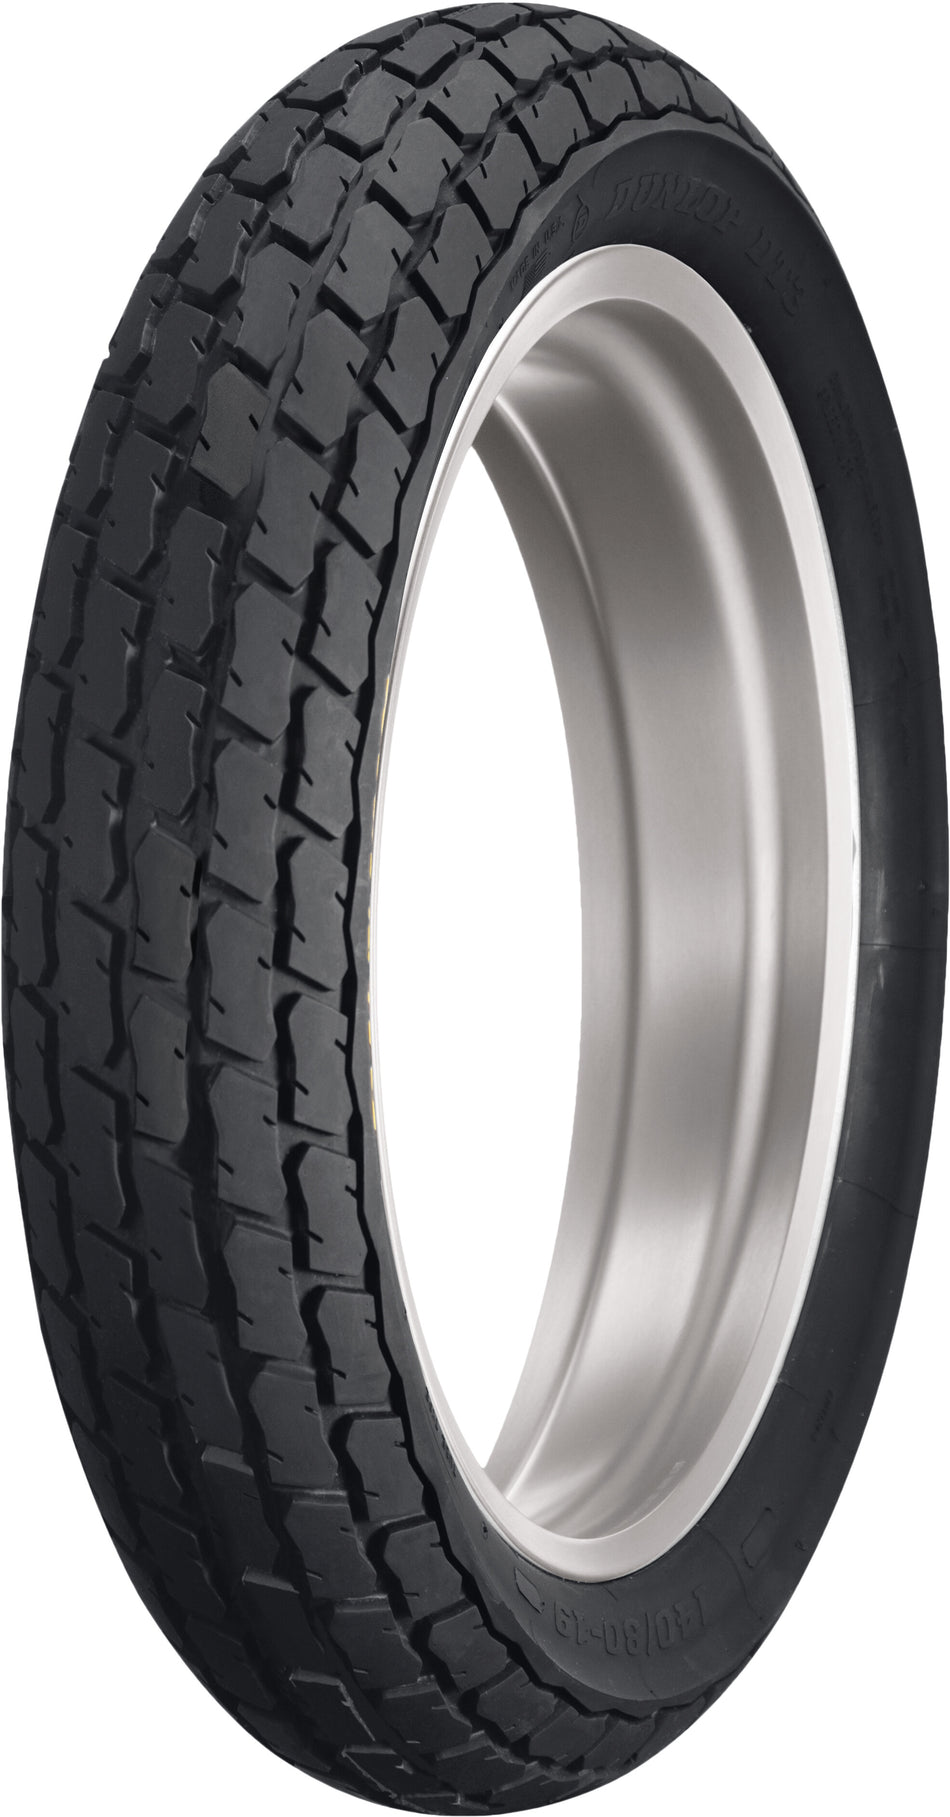 DUNLOP Tire K180a Flat Track Rear 140/80-19 71h Bias Tl 45241544